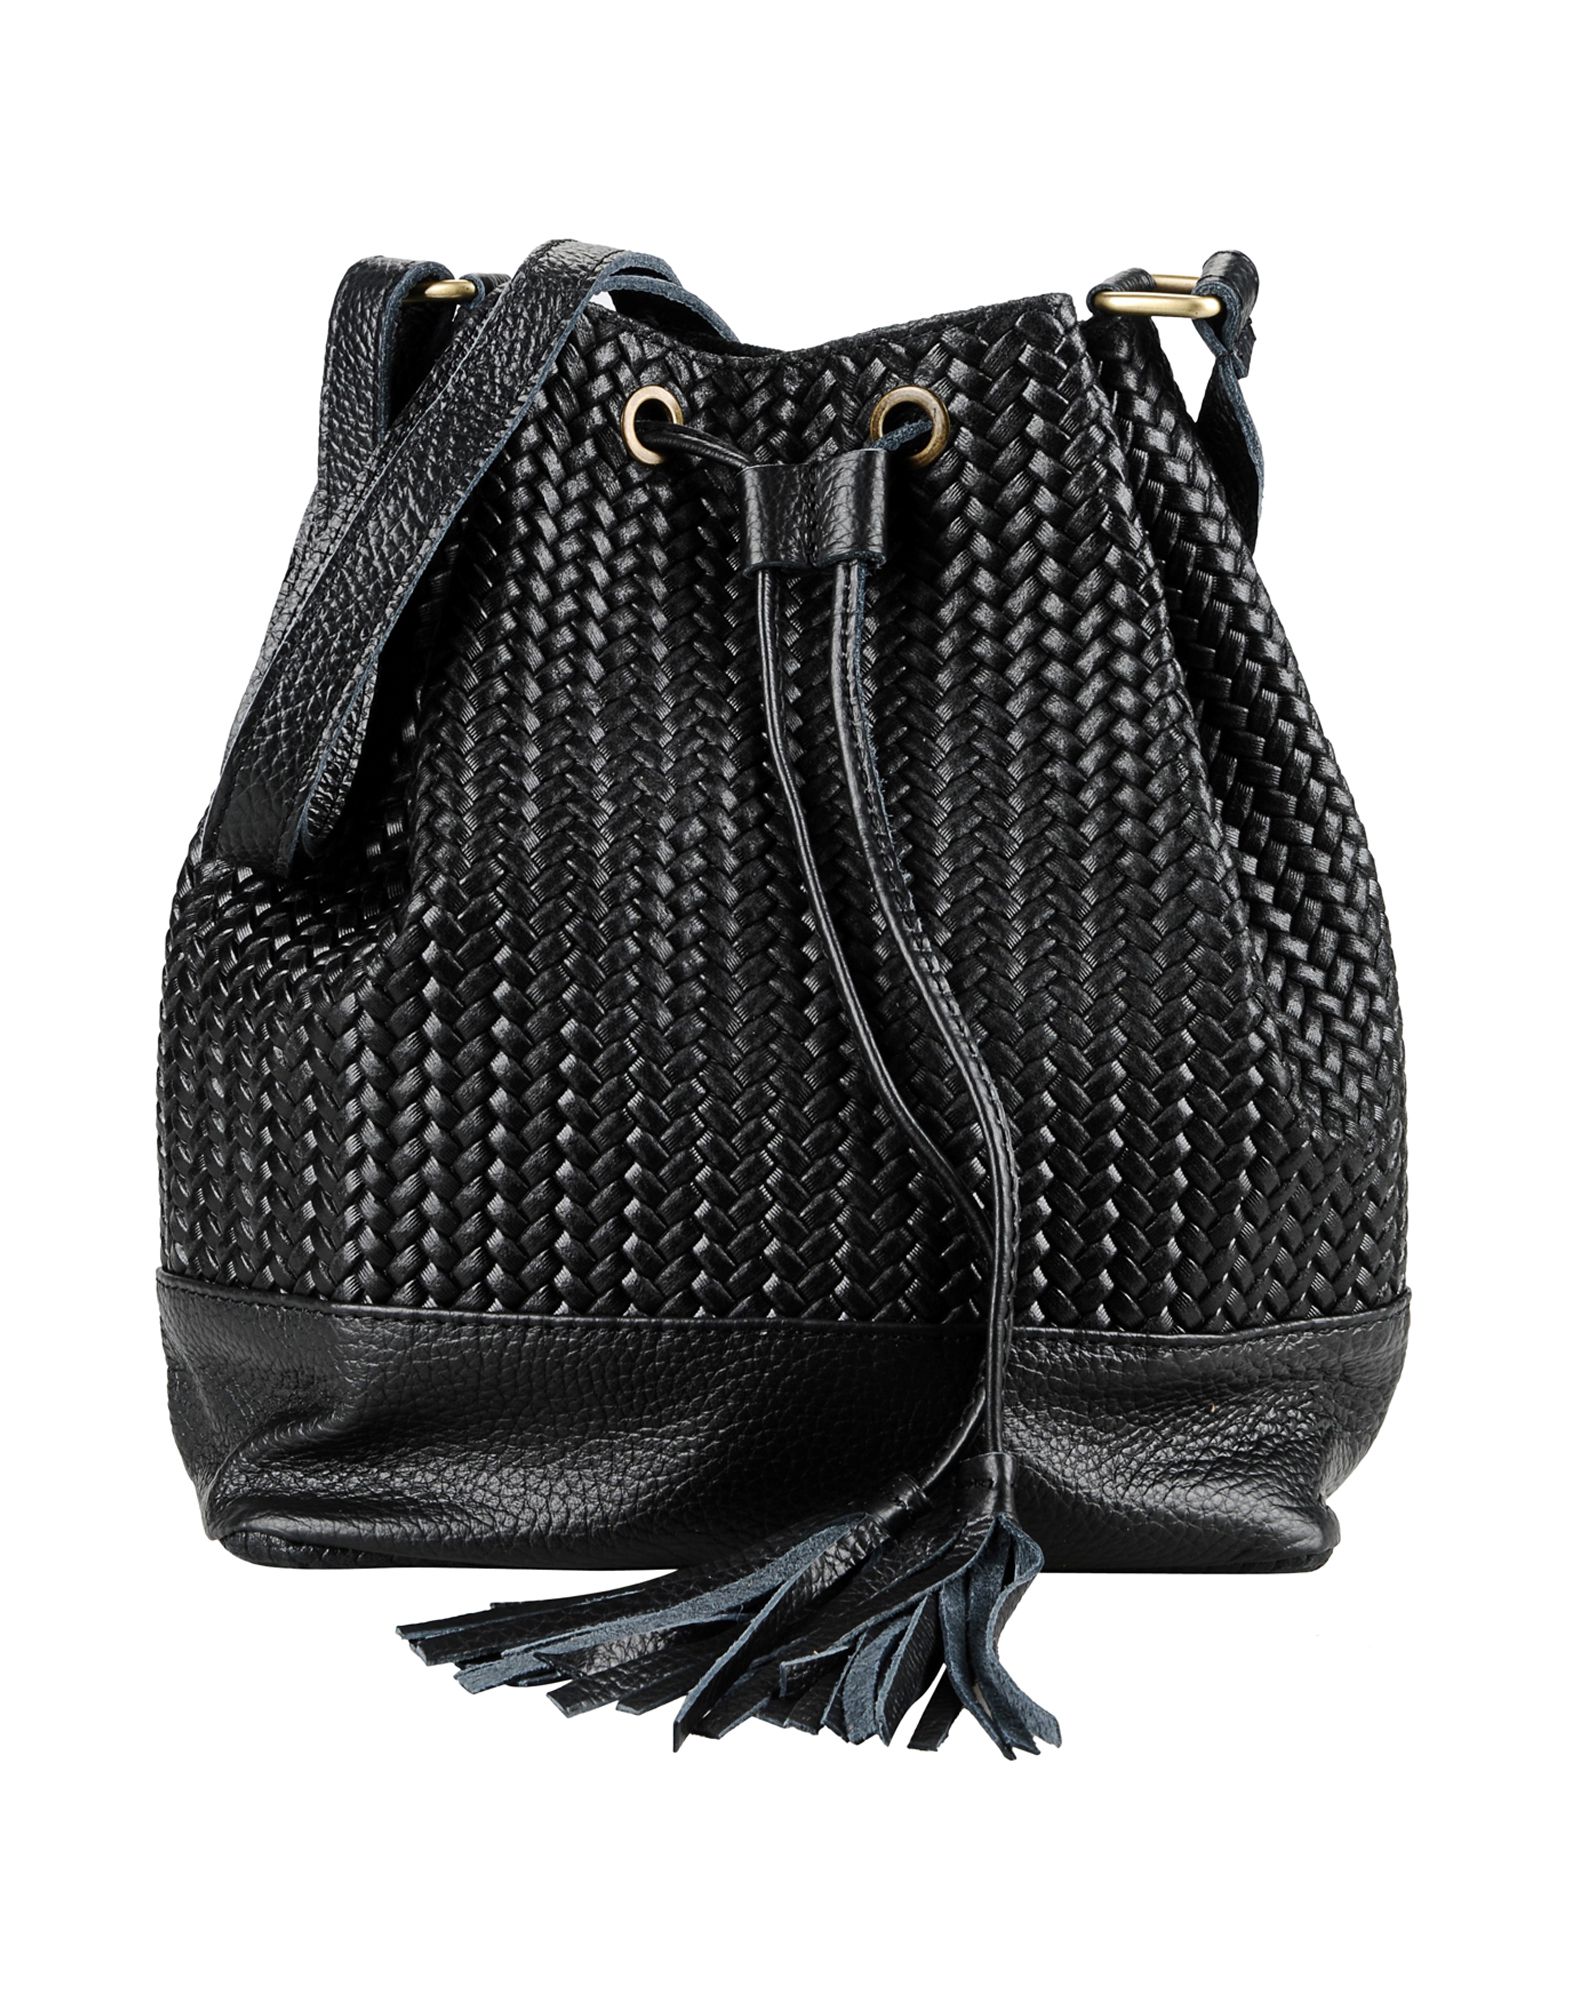 Women\u0026#39;s shoulder bags online: designer bags in leather and silk ...